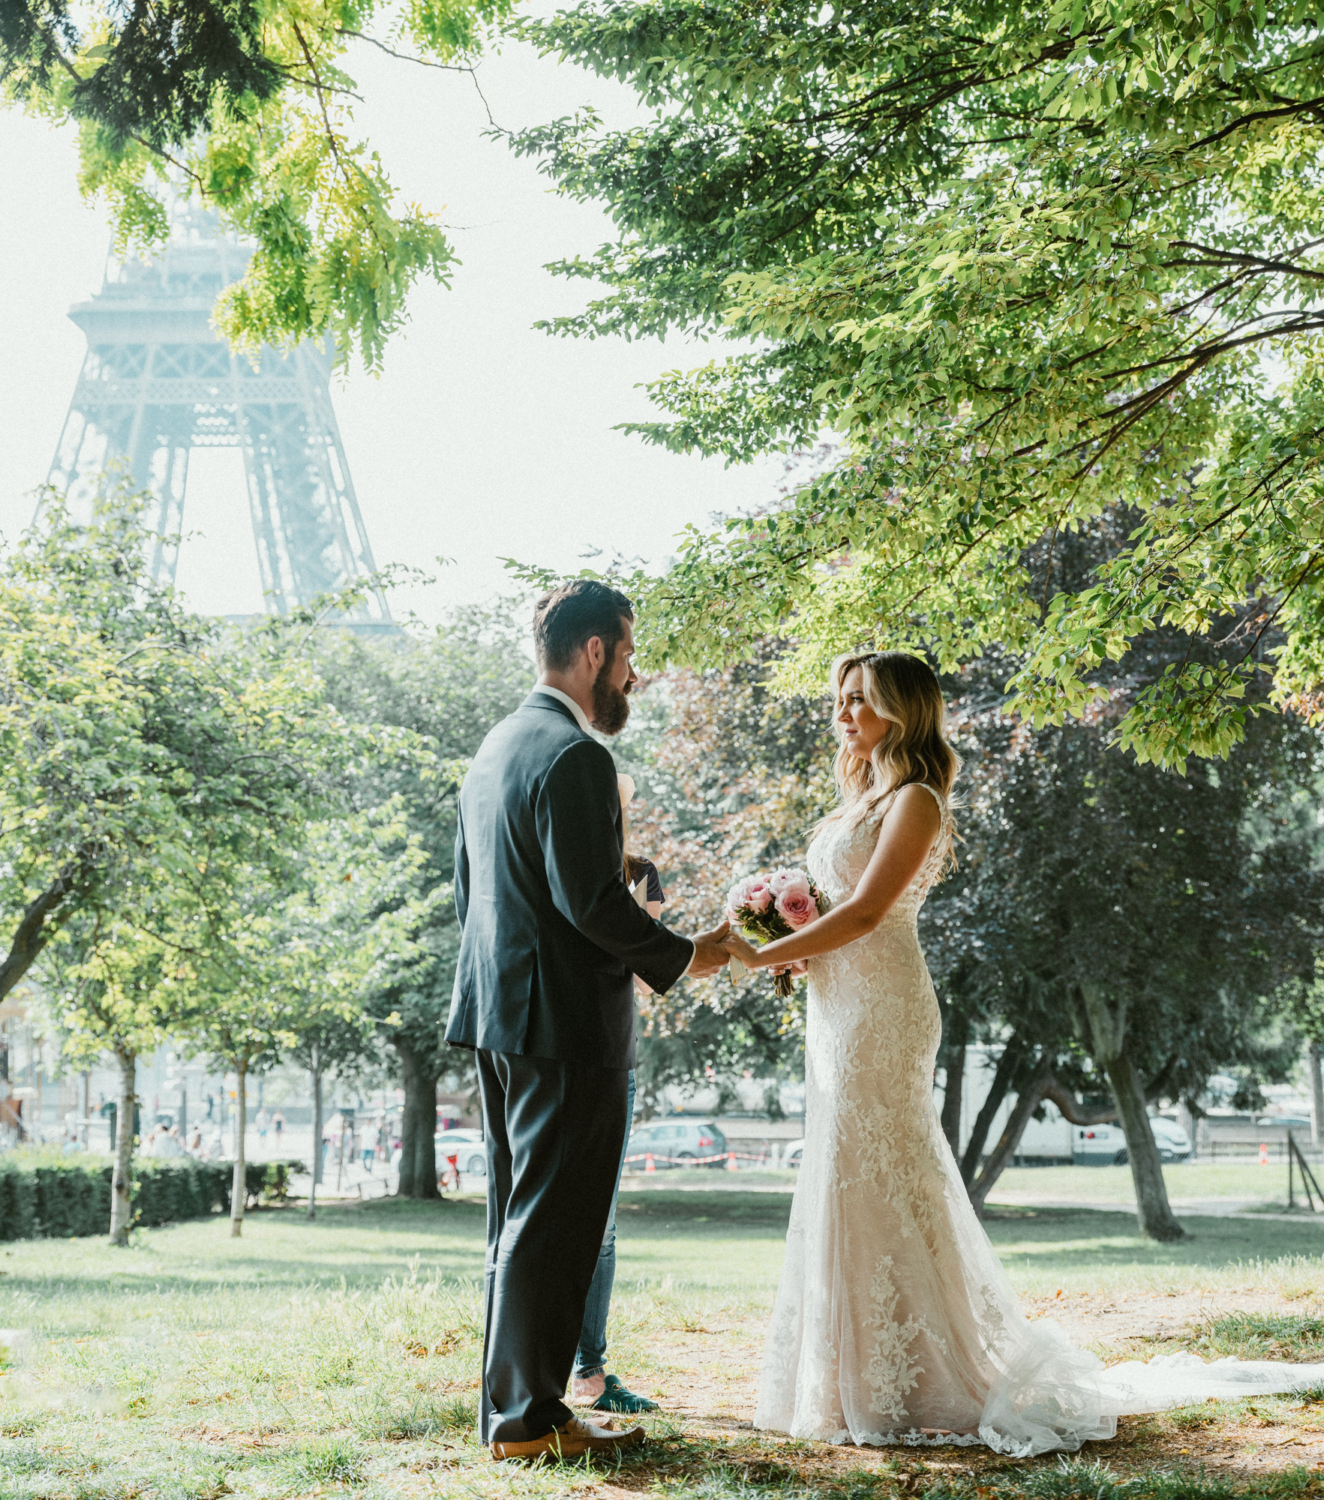 elopement ceremony in trocadero gardens paris france